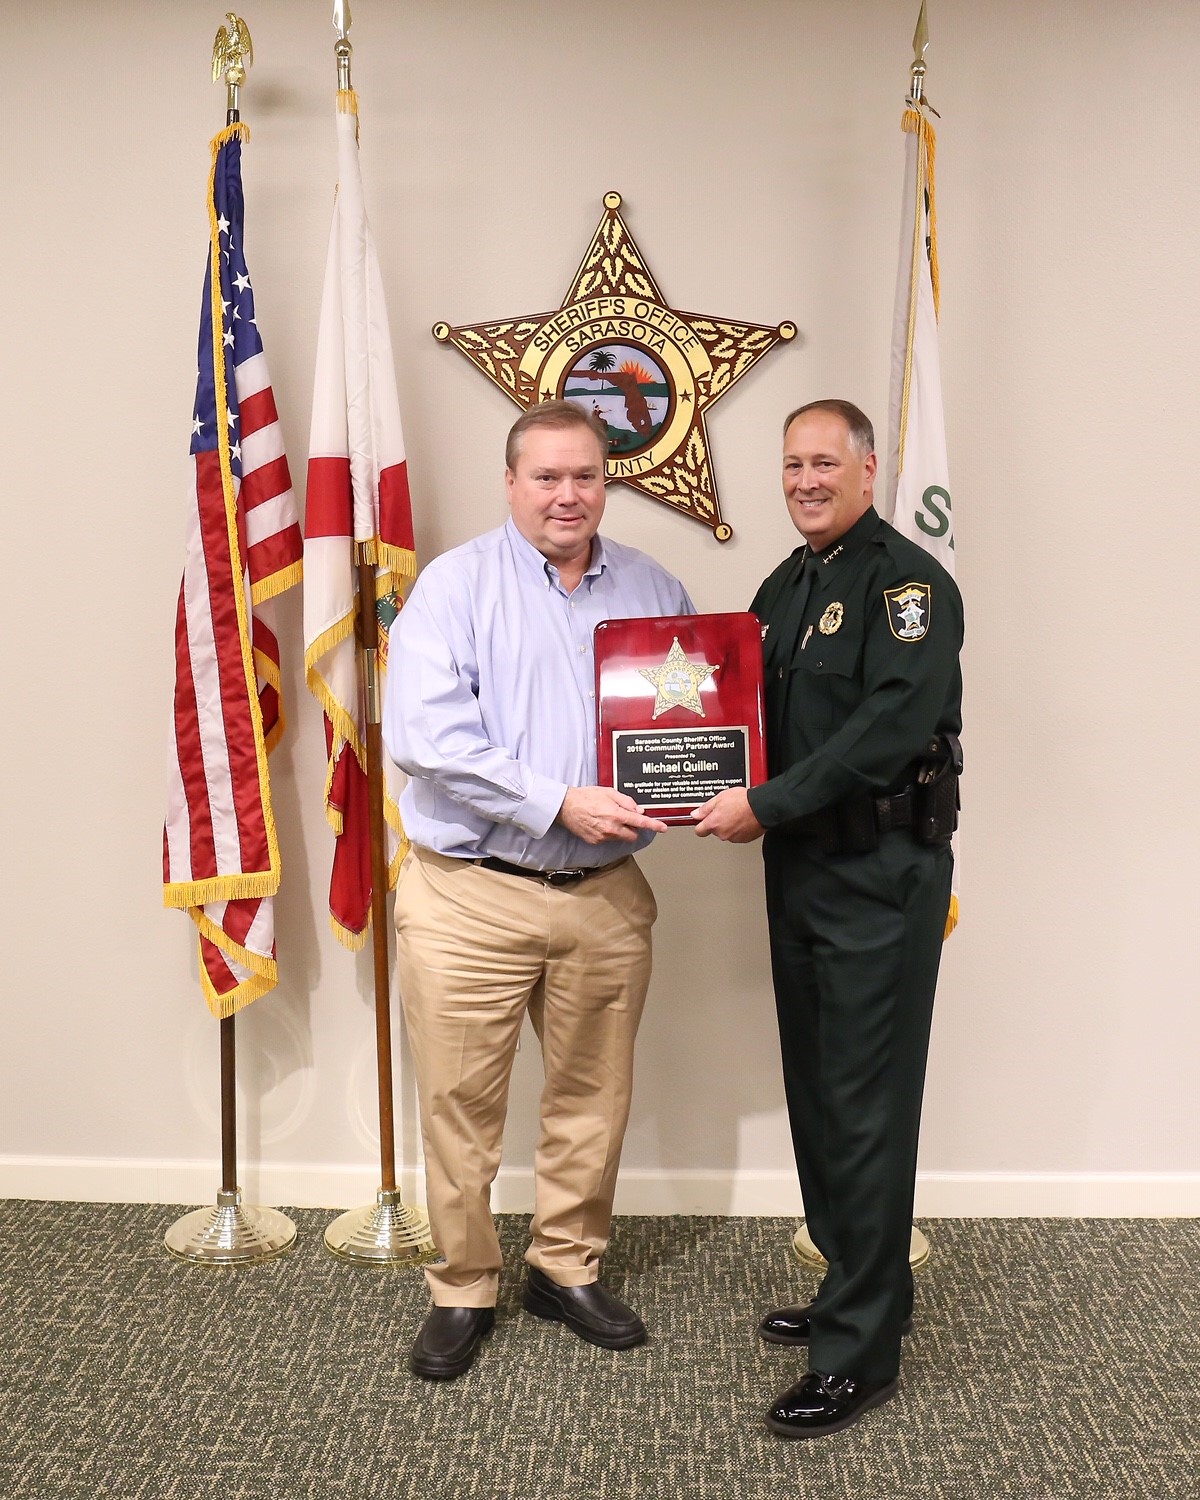 Sarasota Herald-Tribune: Sarasota Sheriff’s Office presents community award to Mike Quillen